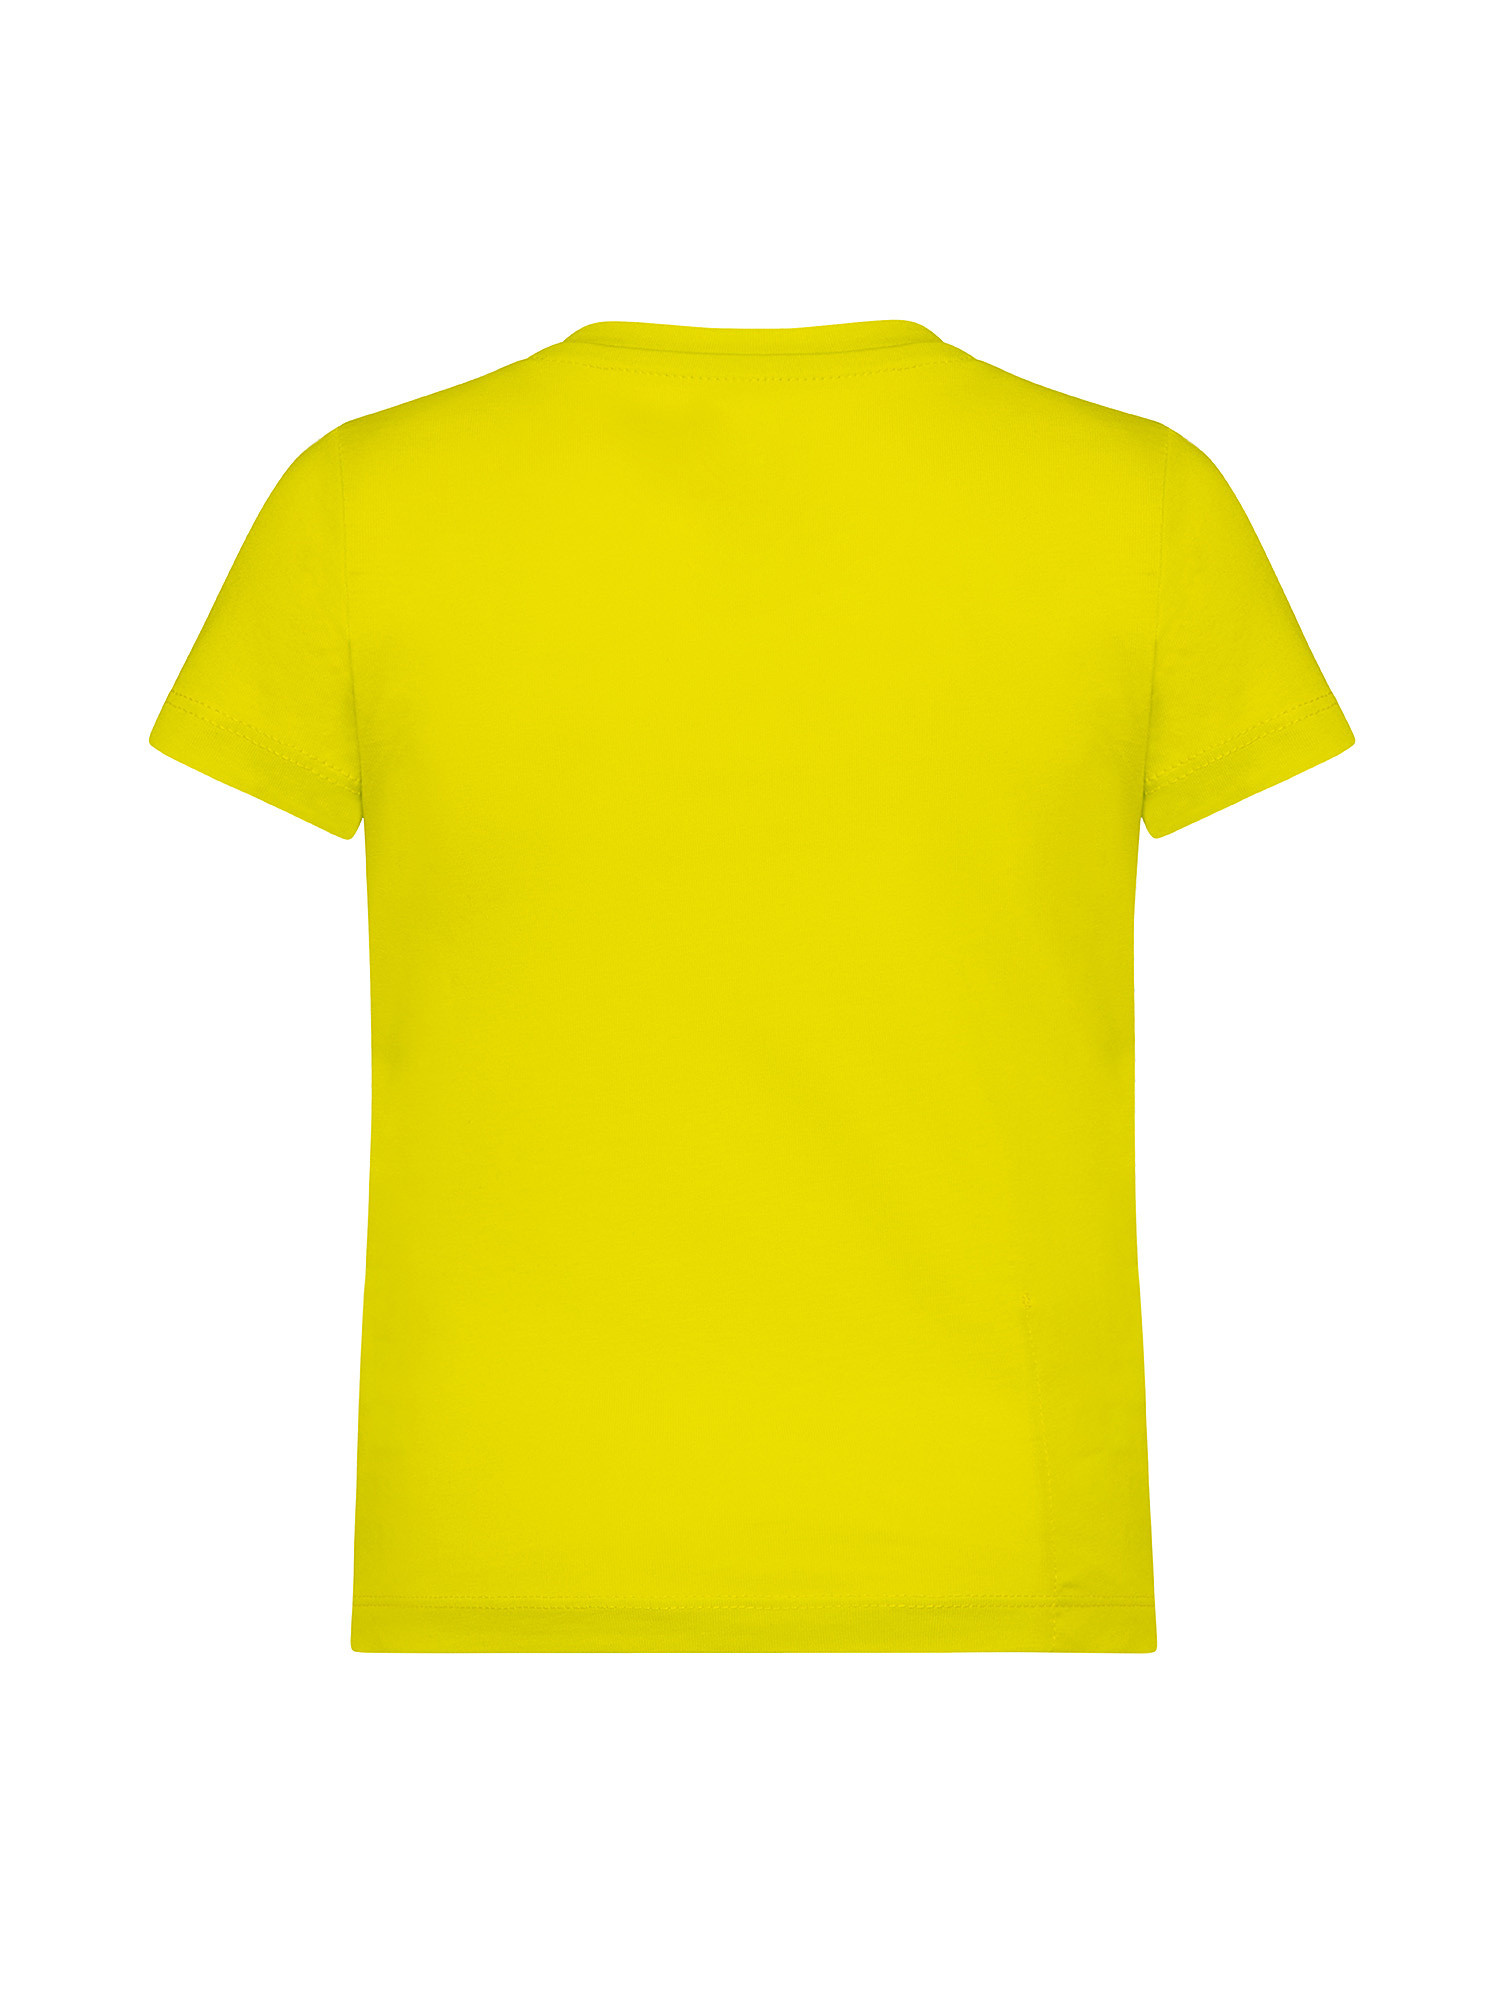 Regular fit boy's T-shirt, Yellow, large image number 1